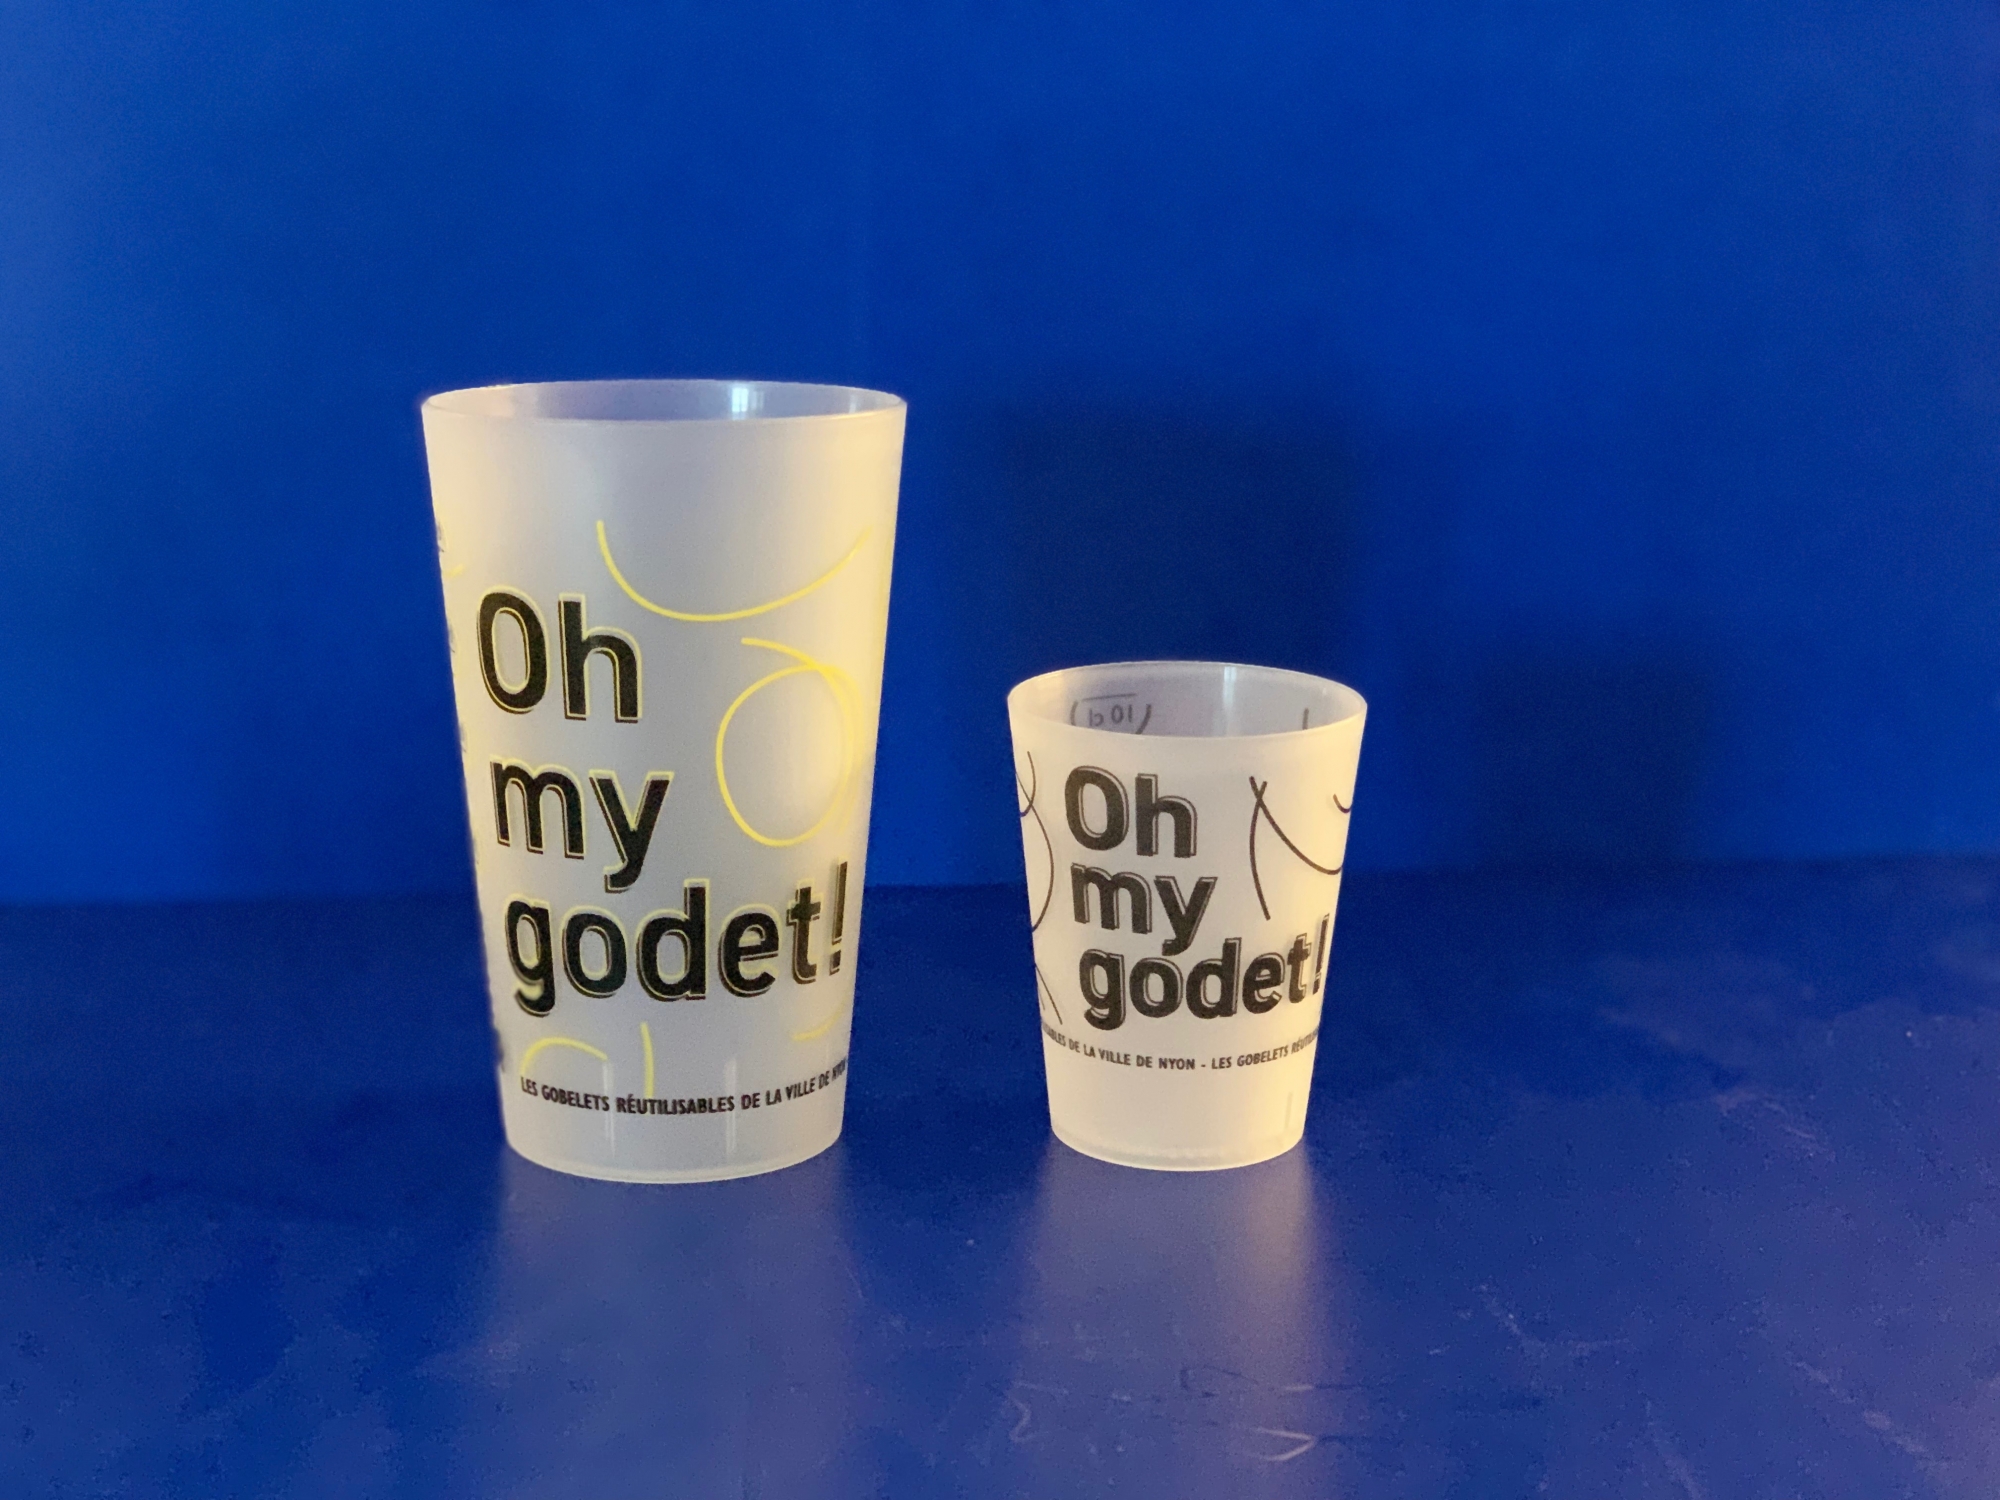 "Oh my godet!": les goblets réutilisables destinés aux manifestations nyonnaises.